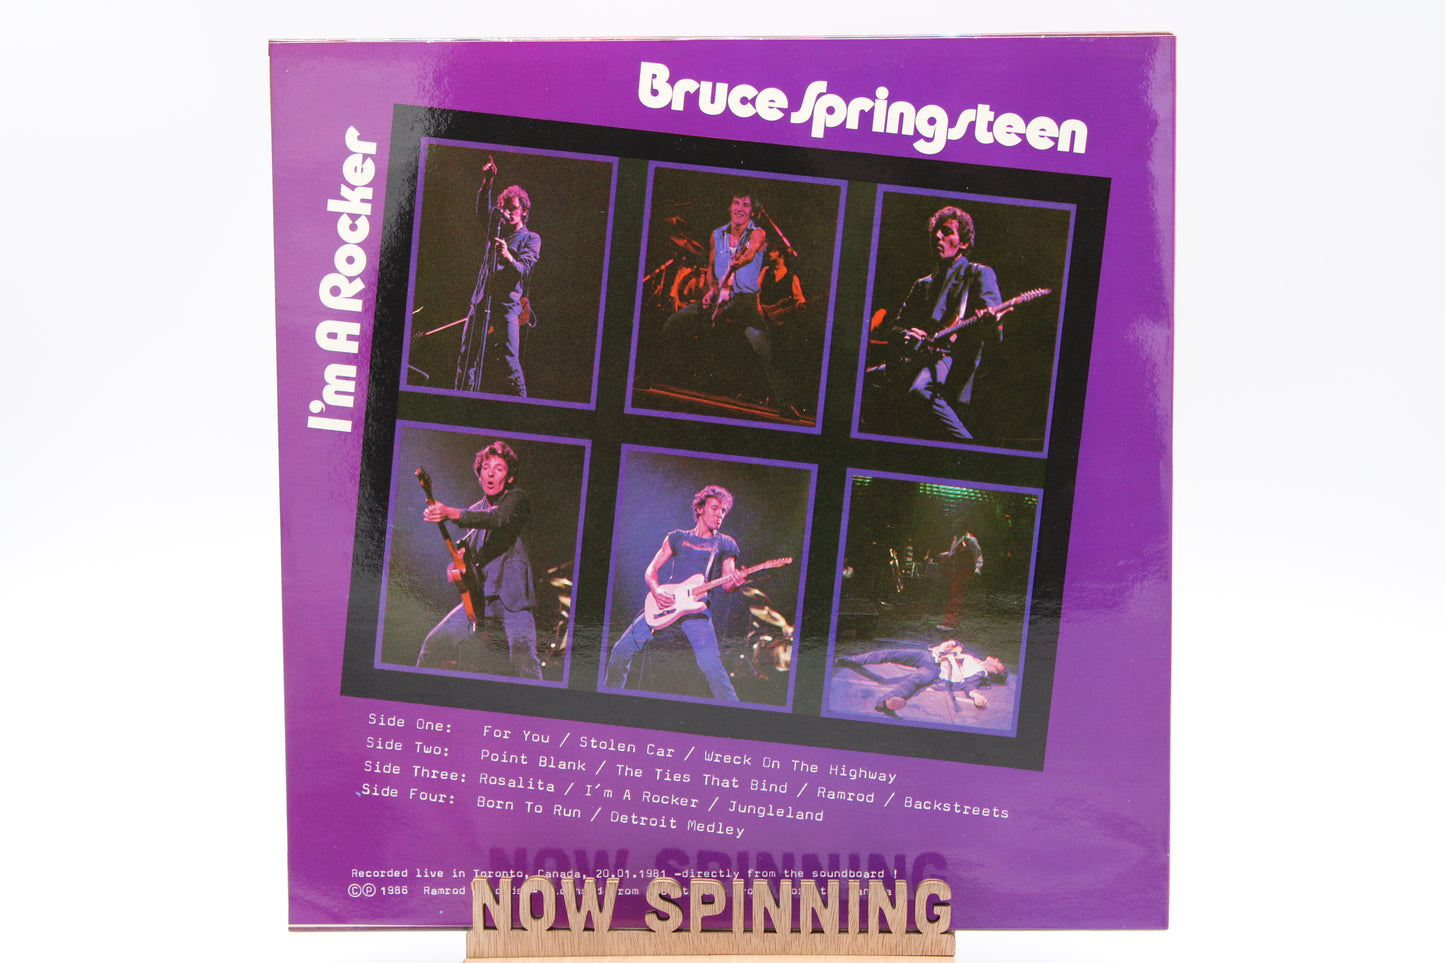 Bruce Springsteen - I'm A Rocker - Live in Toronto 1981 - Unofficial Color Vinyl BLV